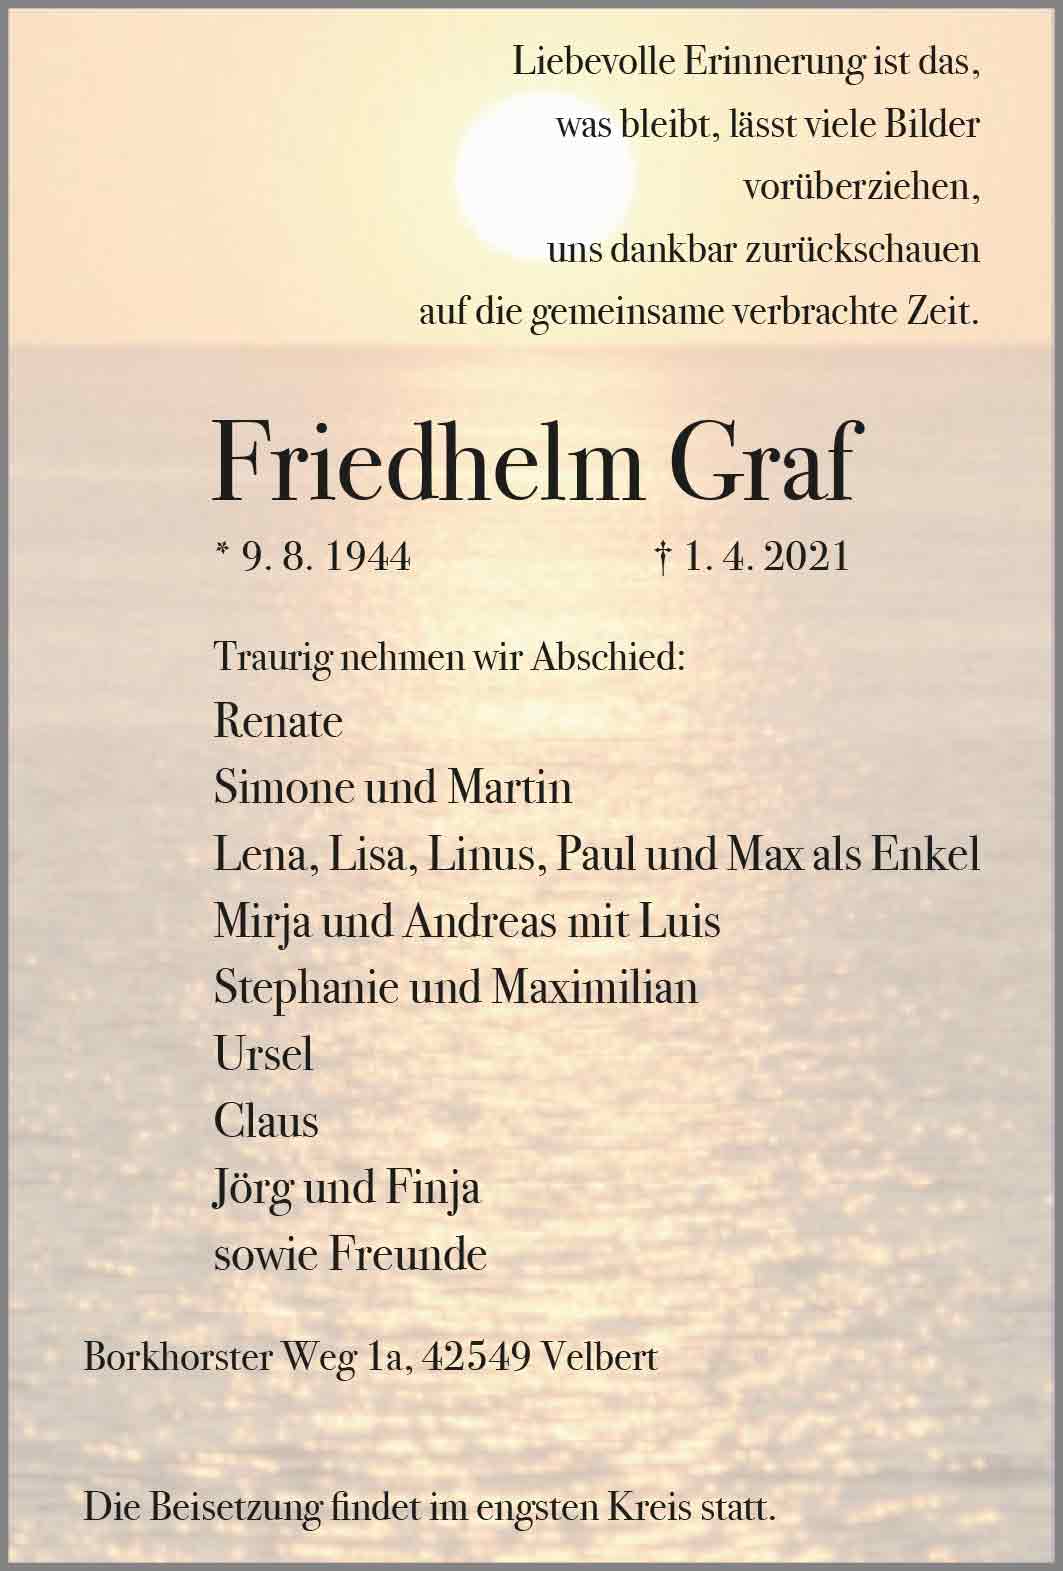 Friedhelm Graf † 1. 4. 2021